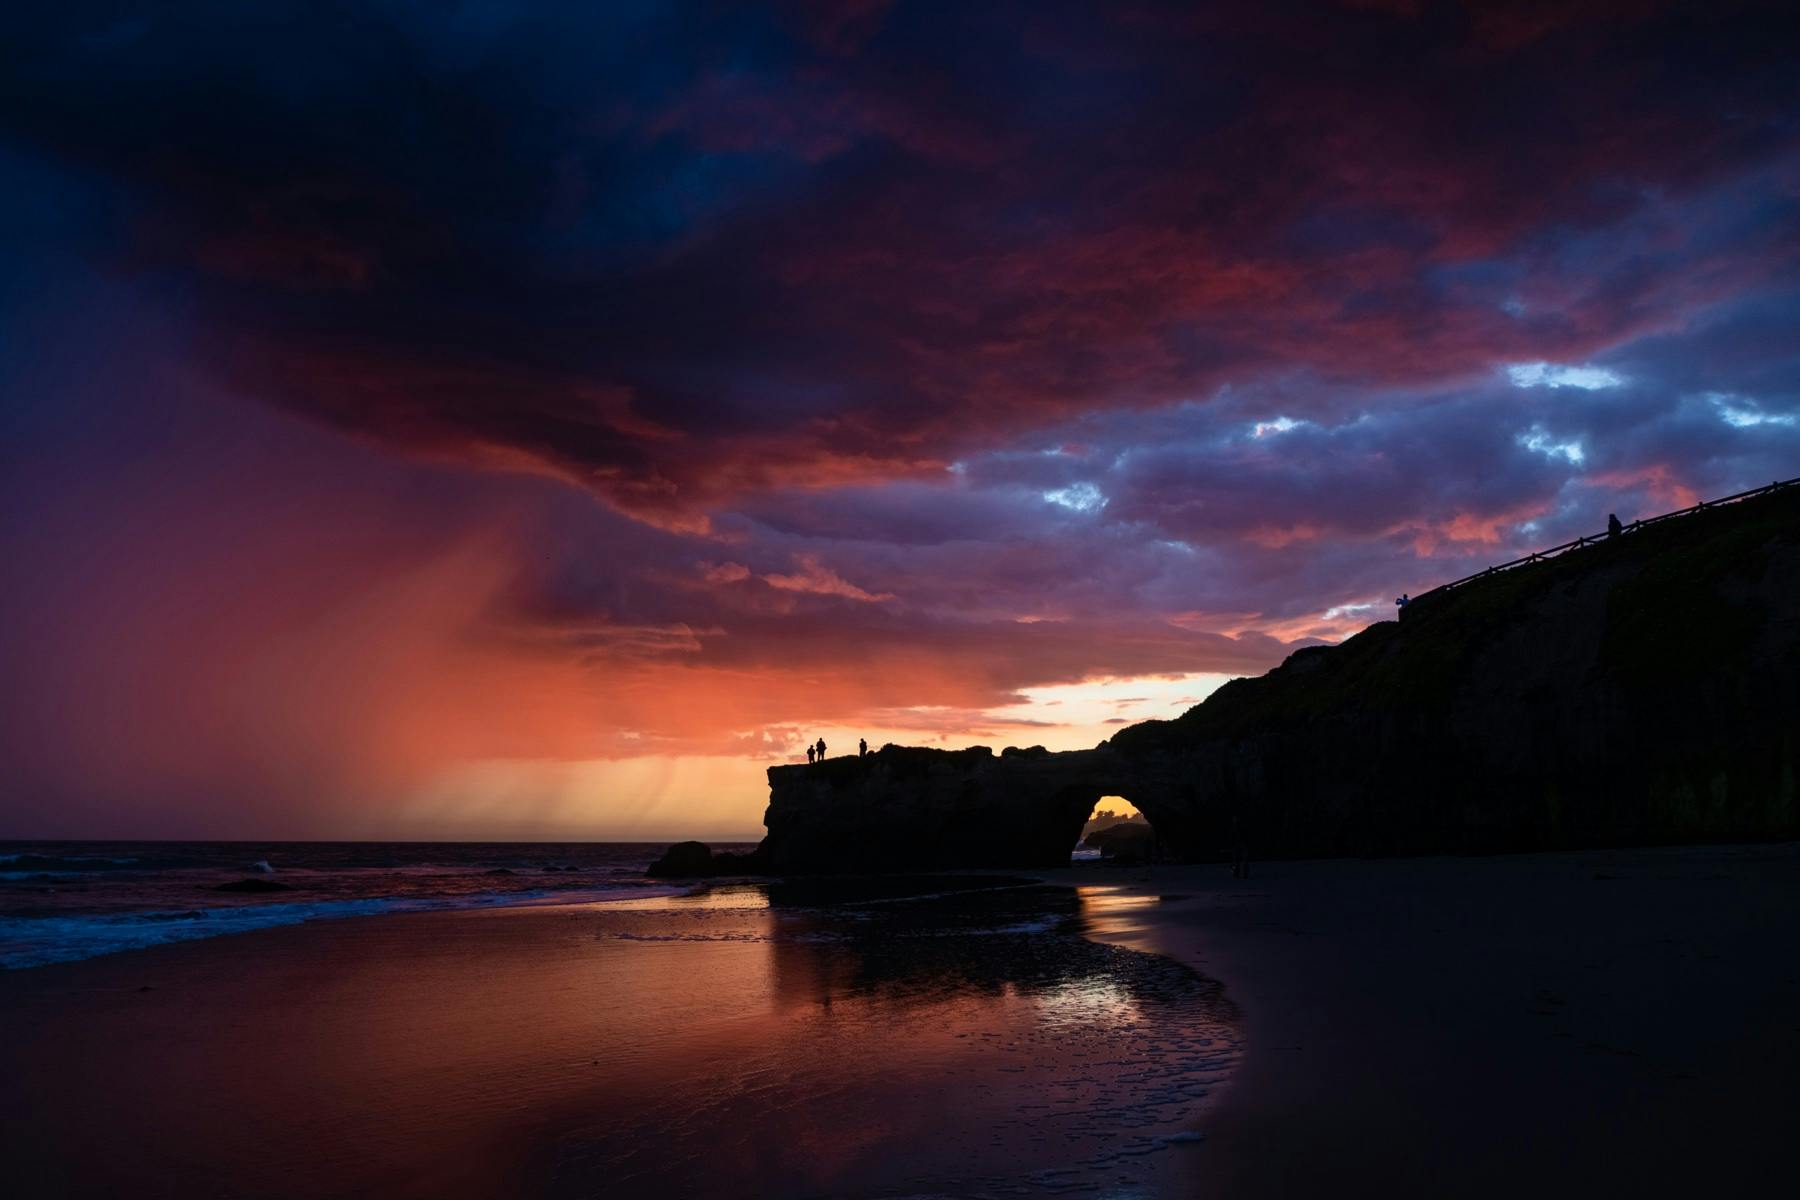 Colorful sunset photo of Its Beach in Santa Cruz, CA captured by Ryan "Chachi" Craig